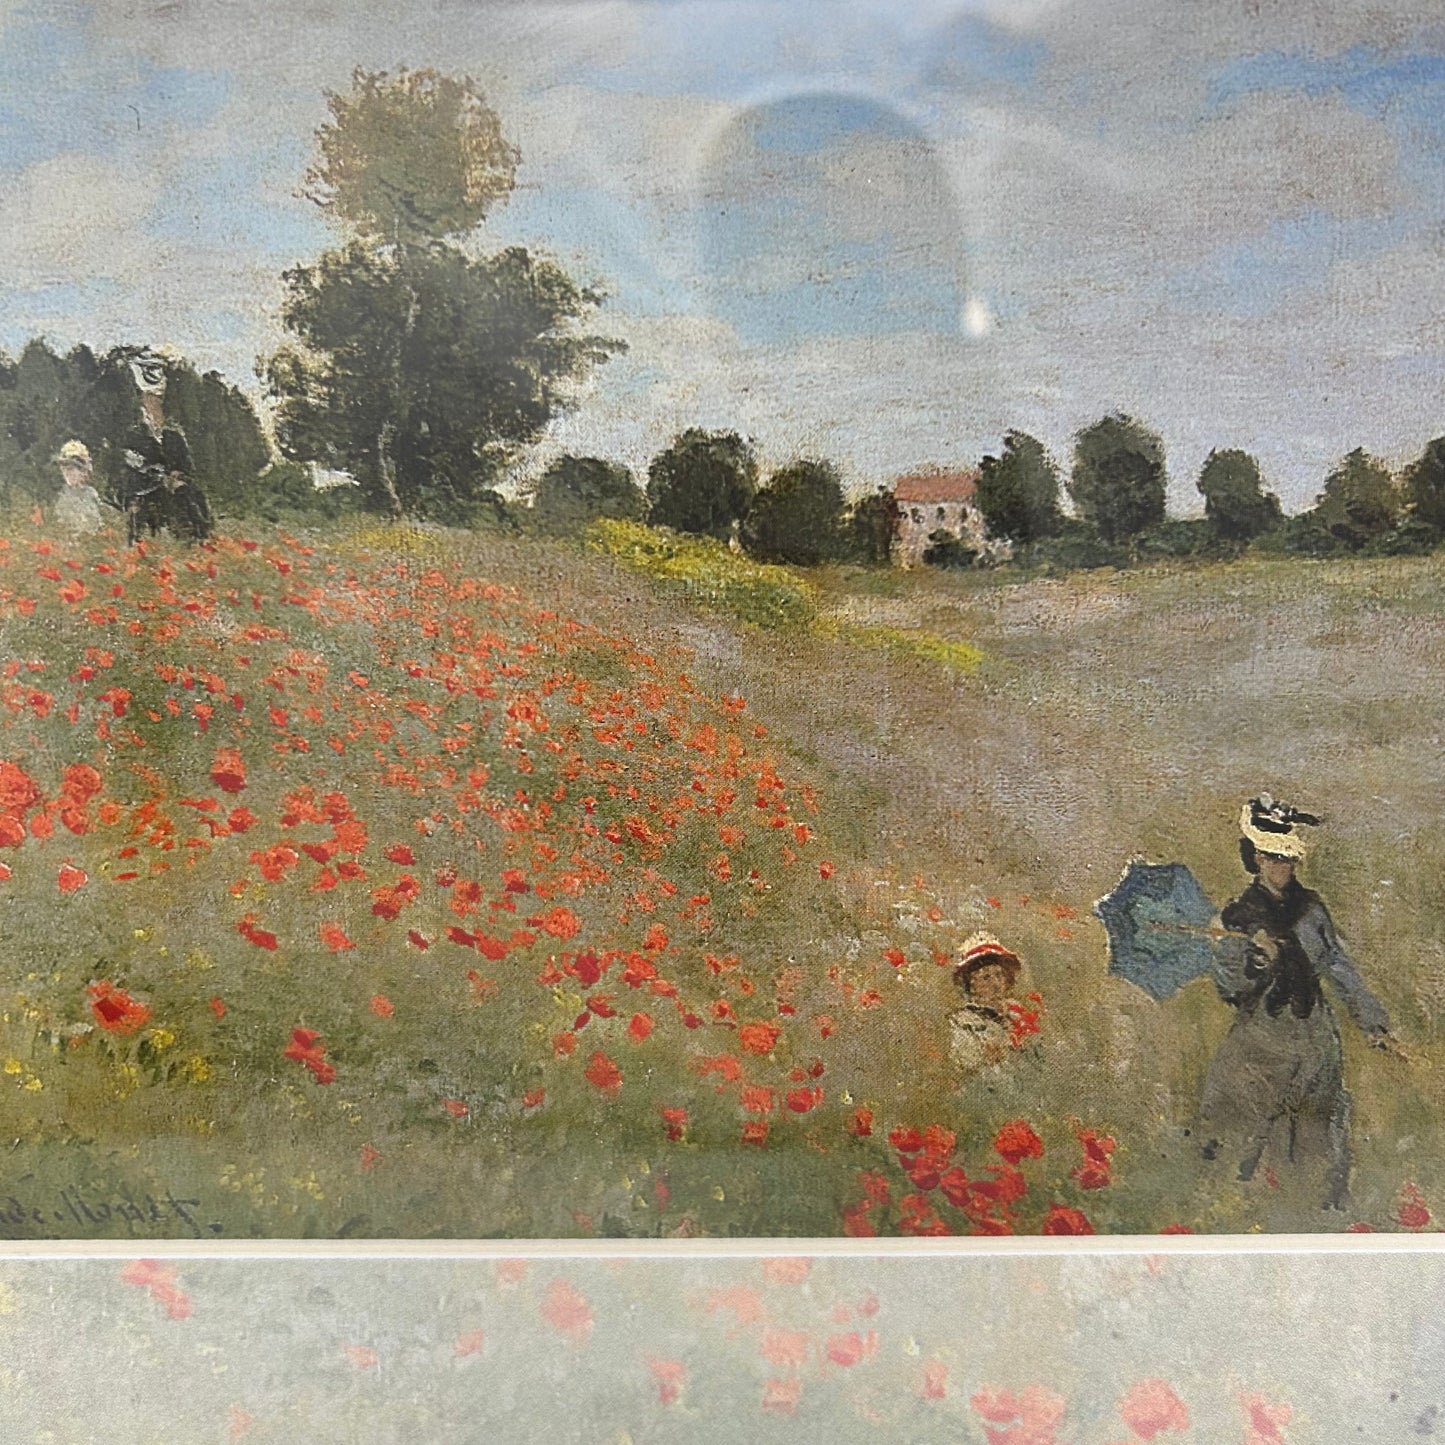 Framed Claude Monet Print - “The Poppy Field”